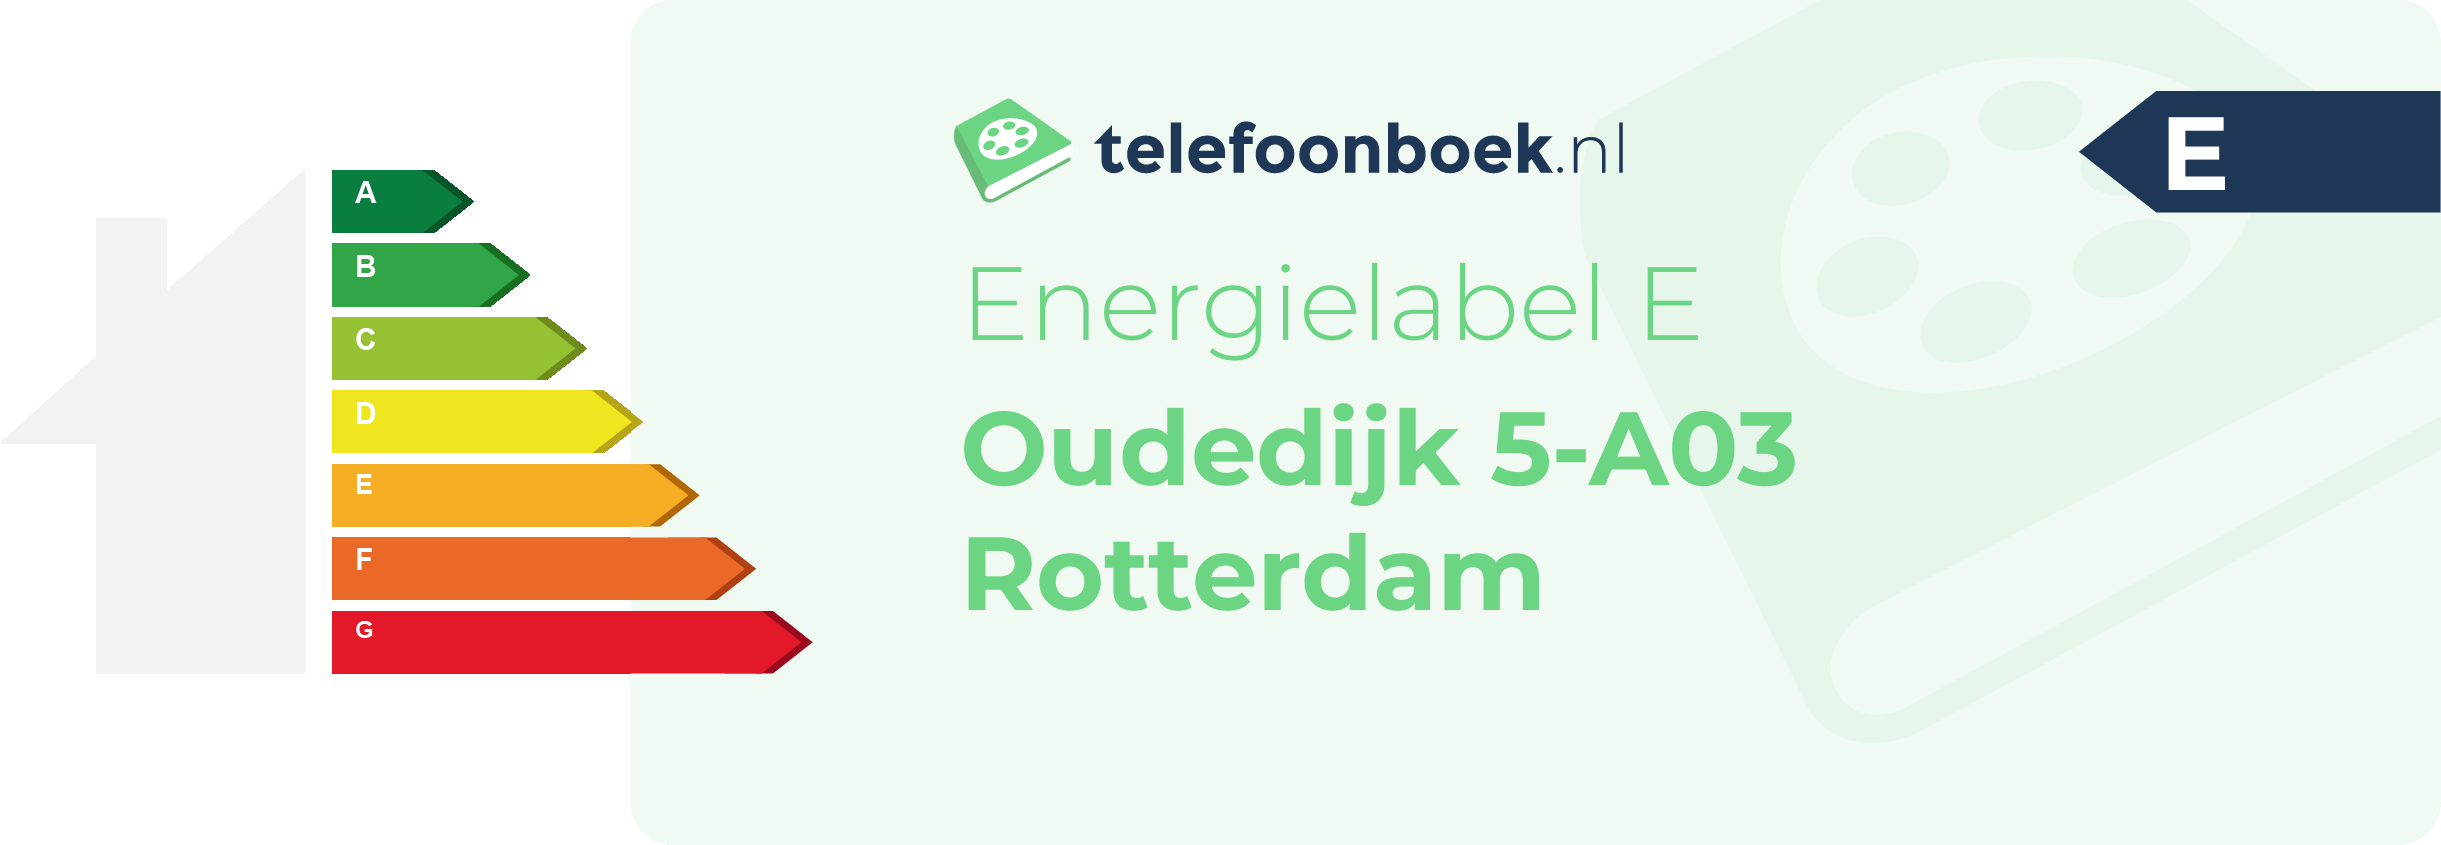 Energielabel Oudedijk 5-A03 Rotterdam